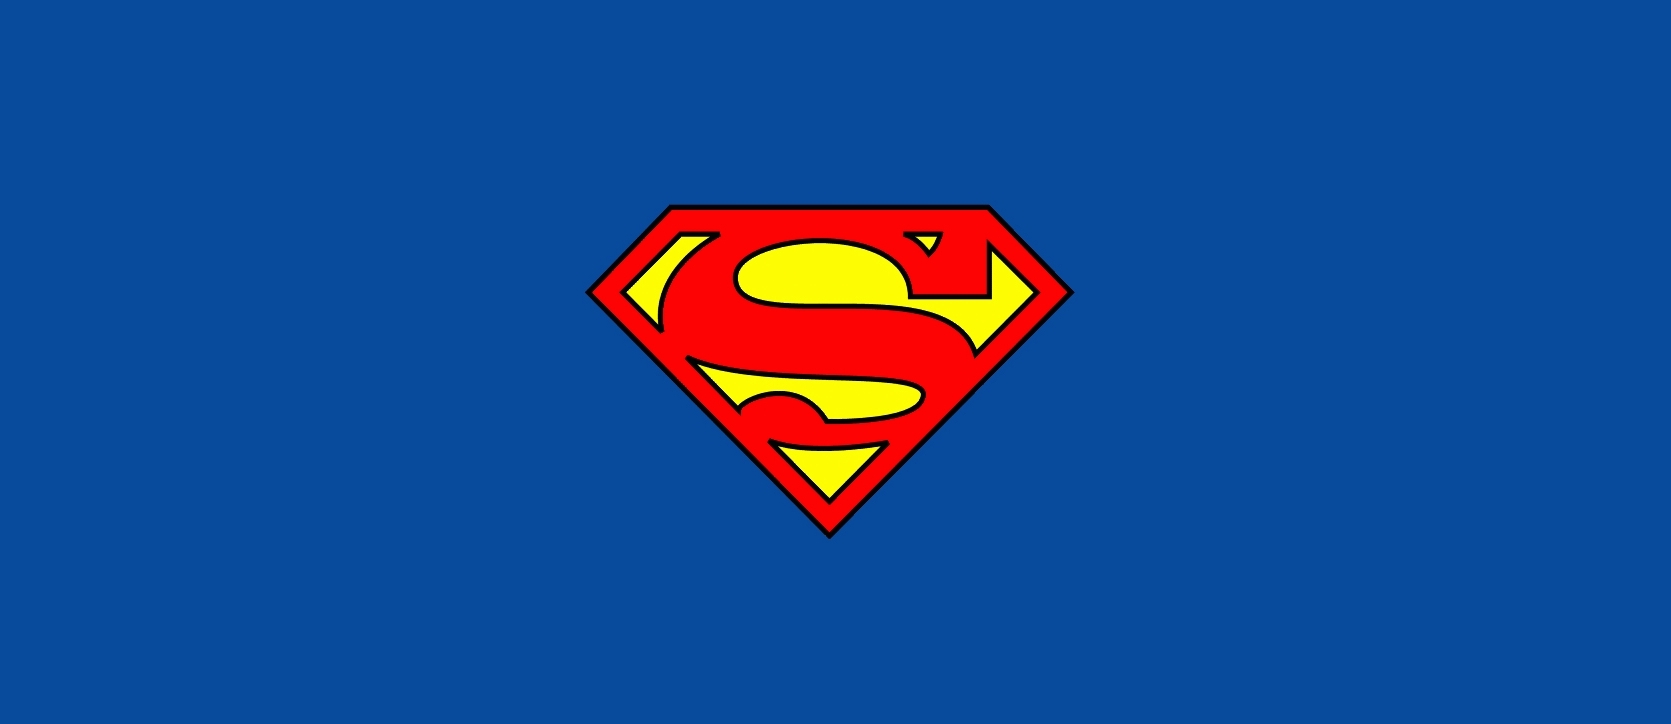 superman logo wallpaper,superman,fictional character,superhero,justice league,logo